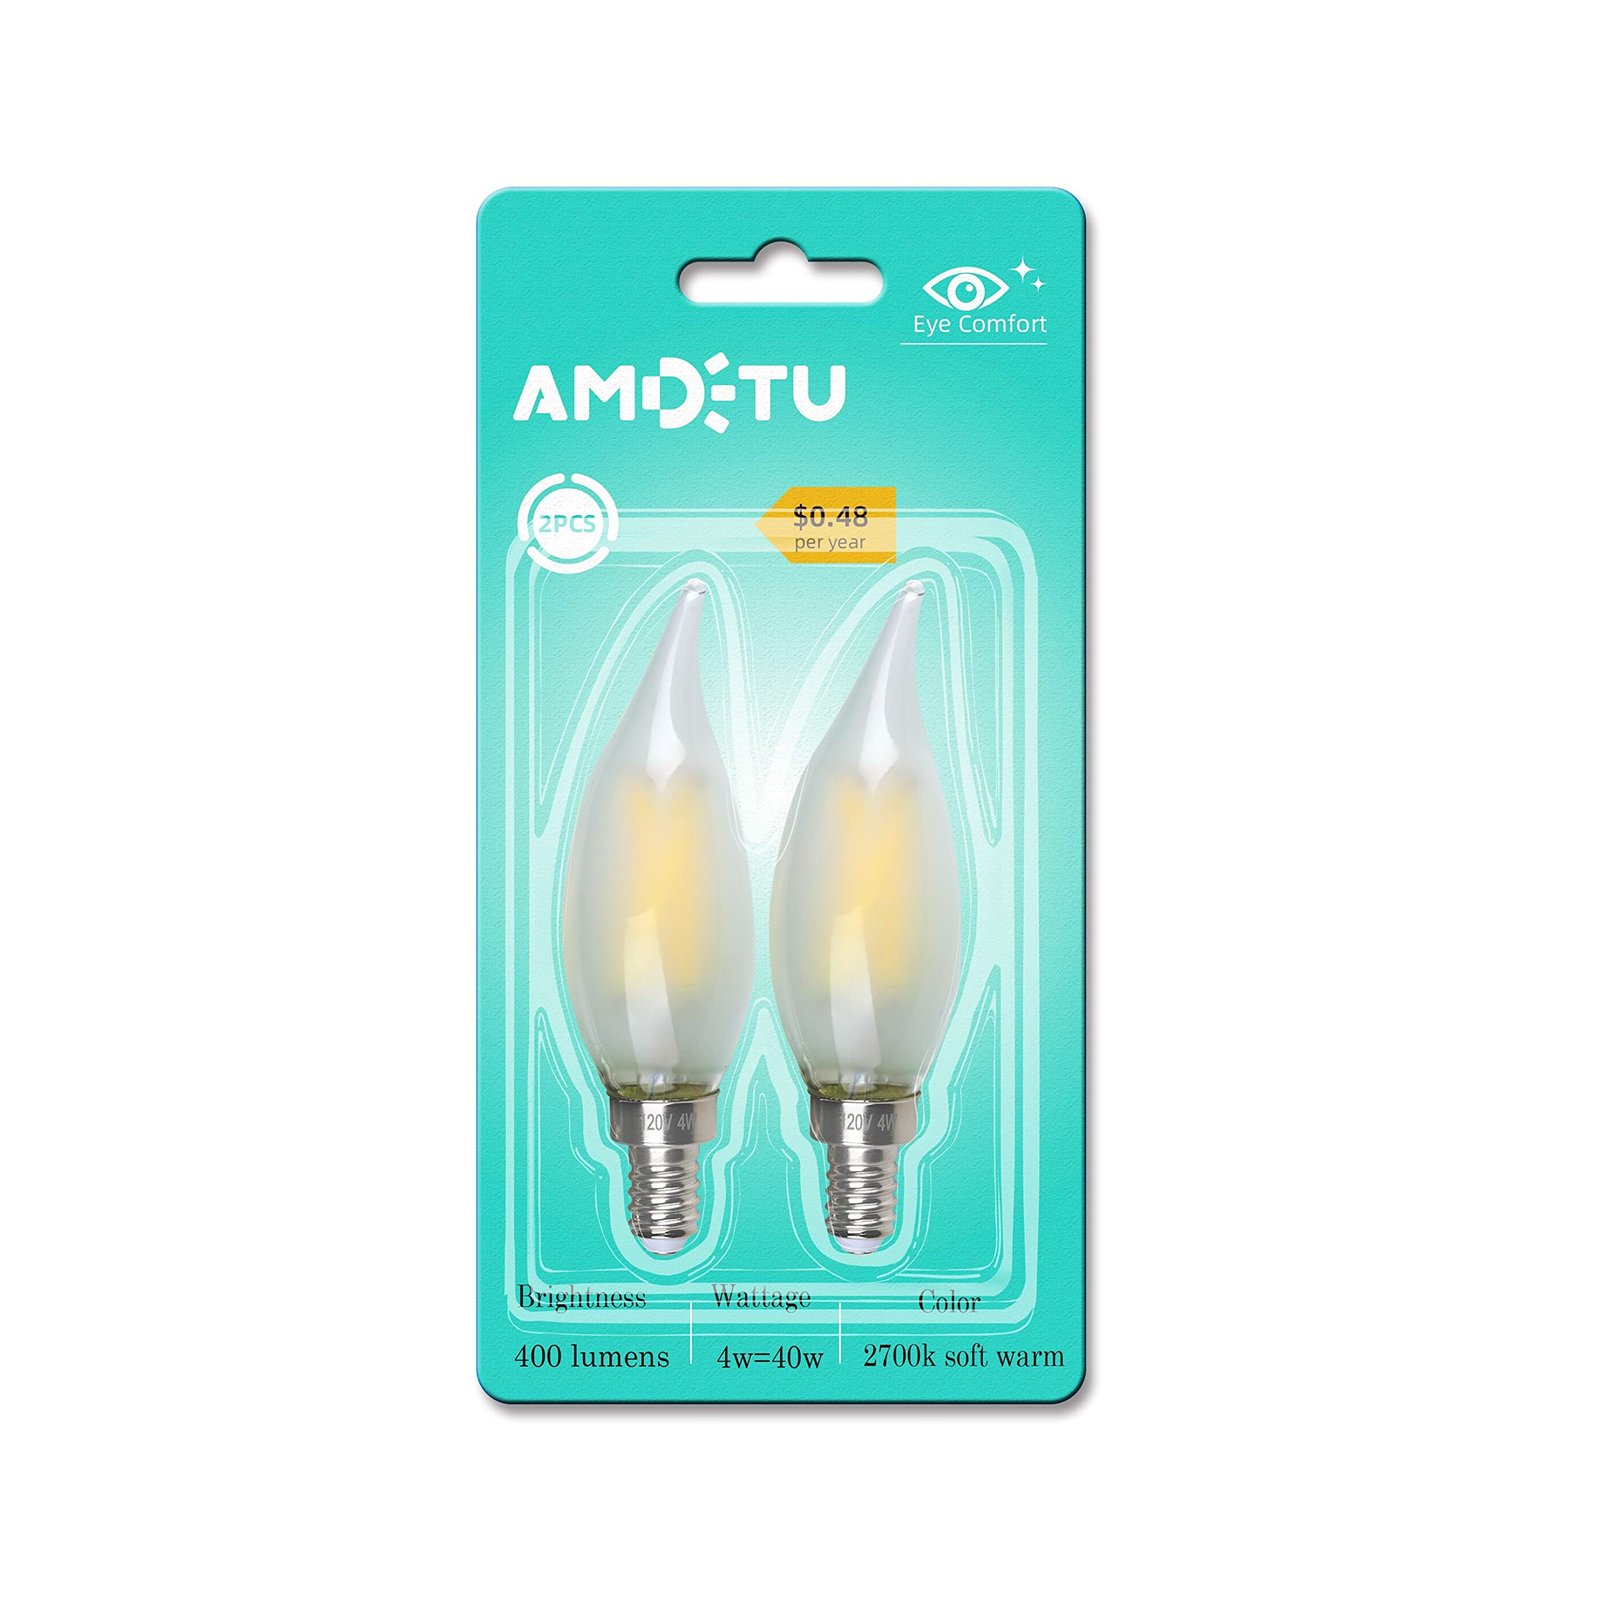 AMDTU E12 LED Bulb, Frosted Chandelier Light Bulbs 2700K Soft Warm White, 40W Type B Candelabra Light Bulbs Small Base, Dimmable, 2 Pack